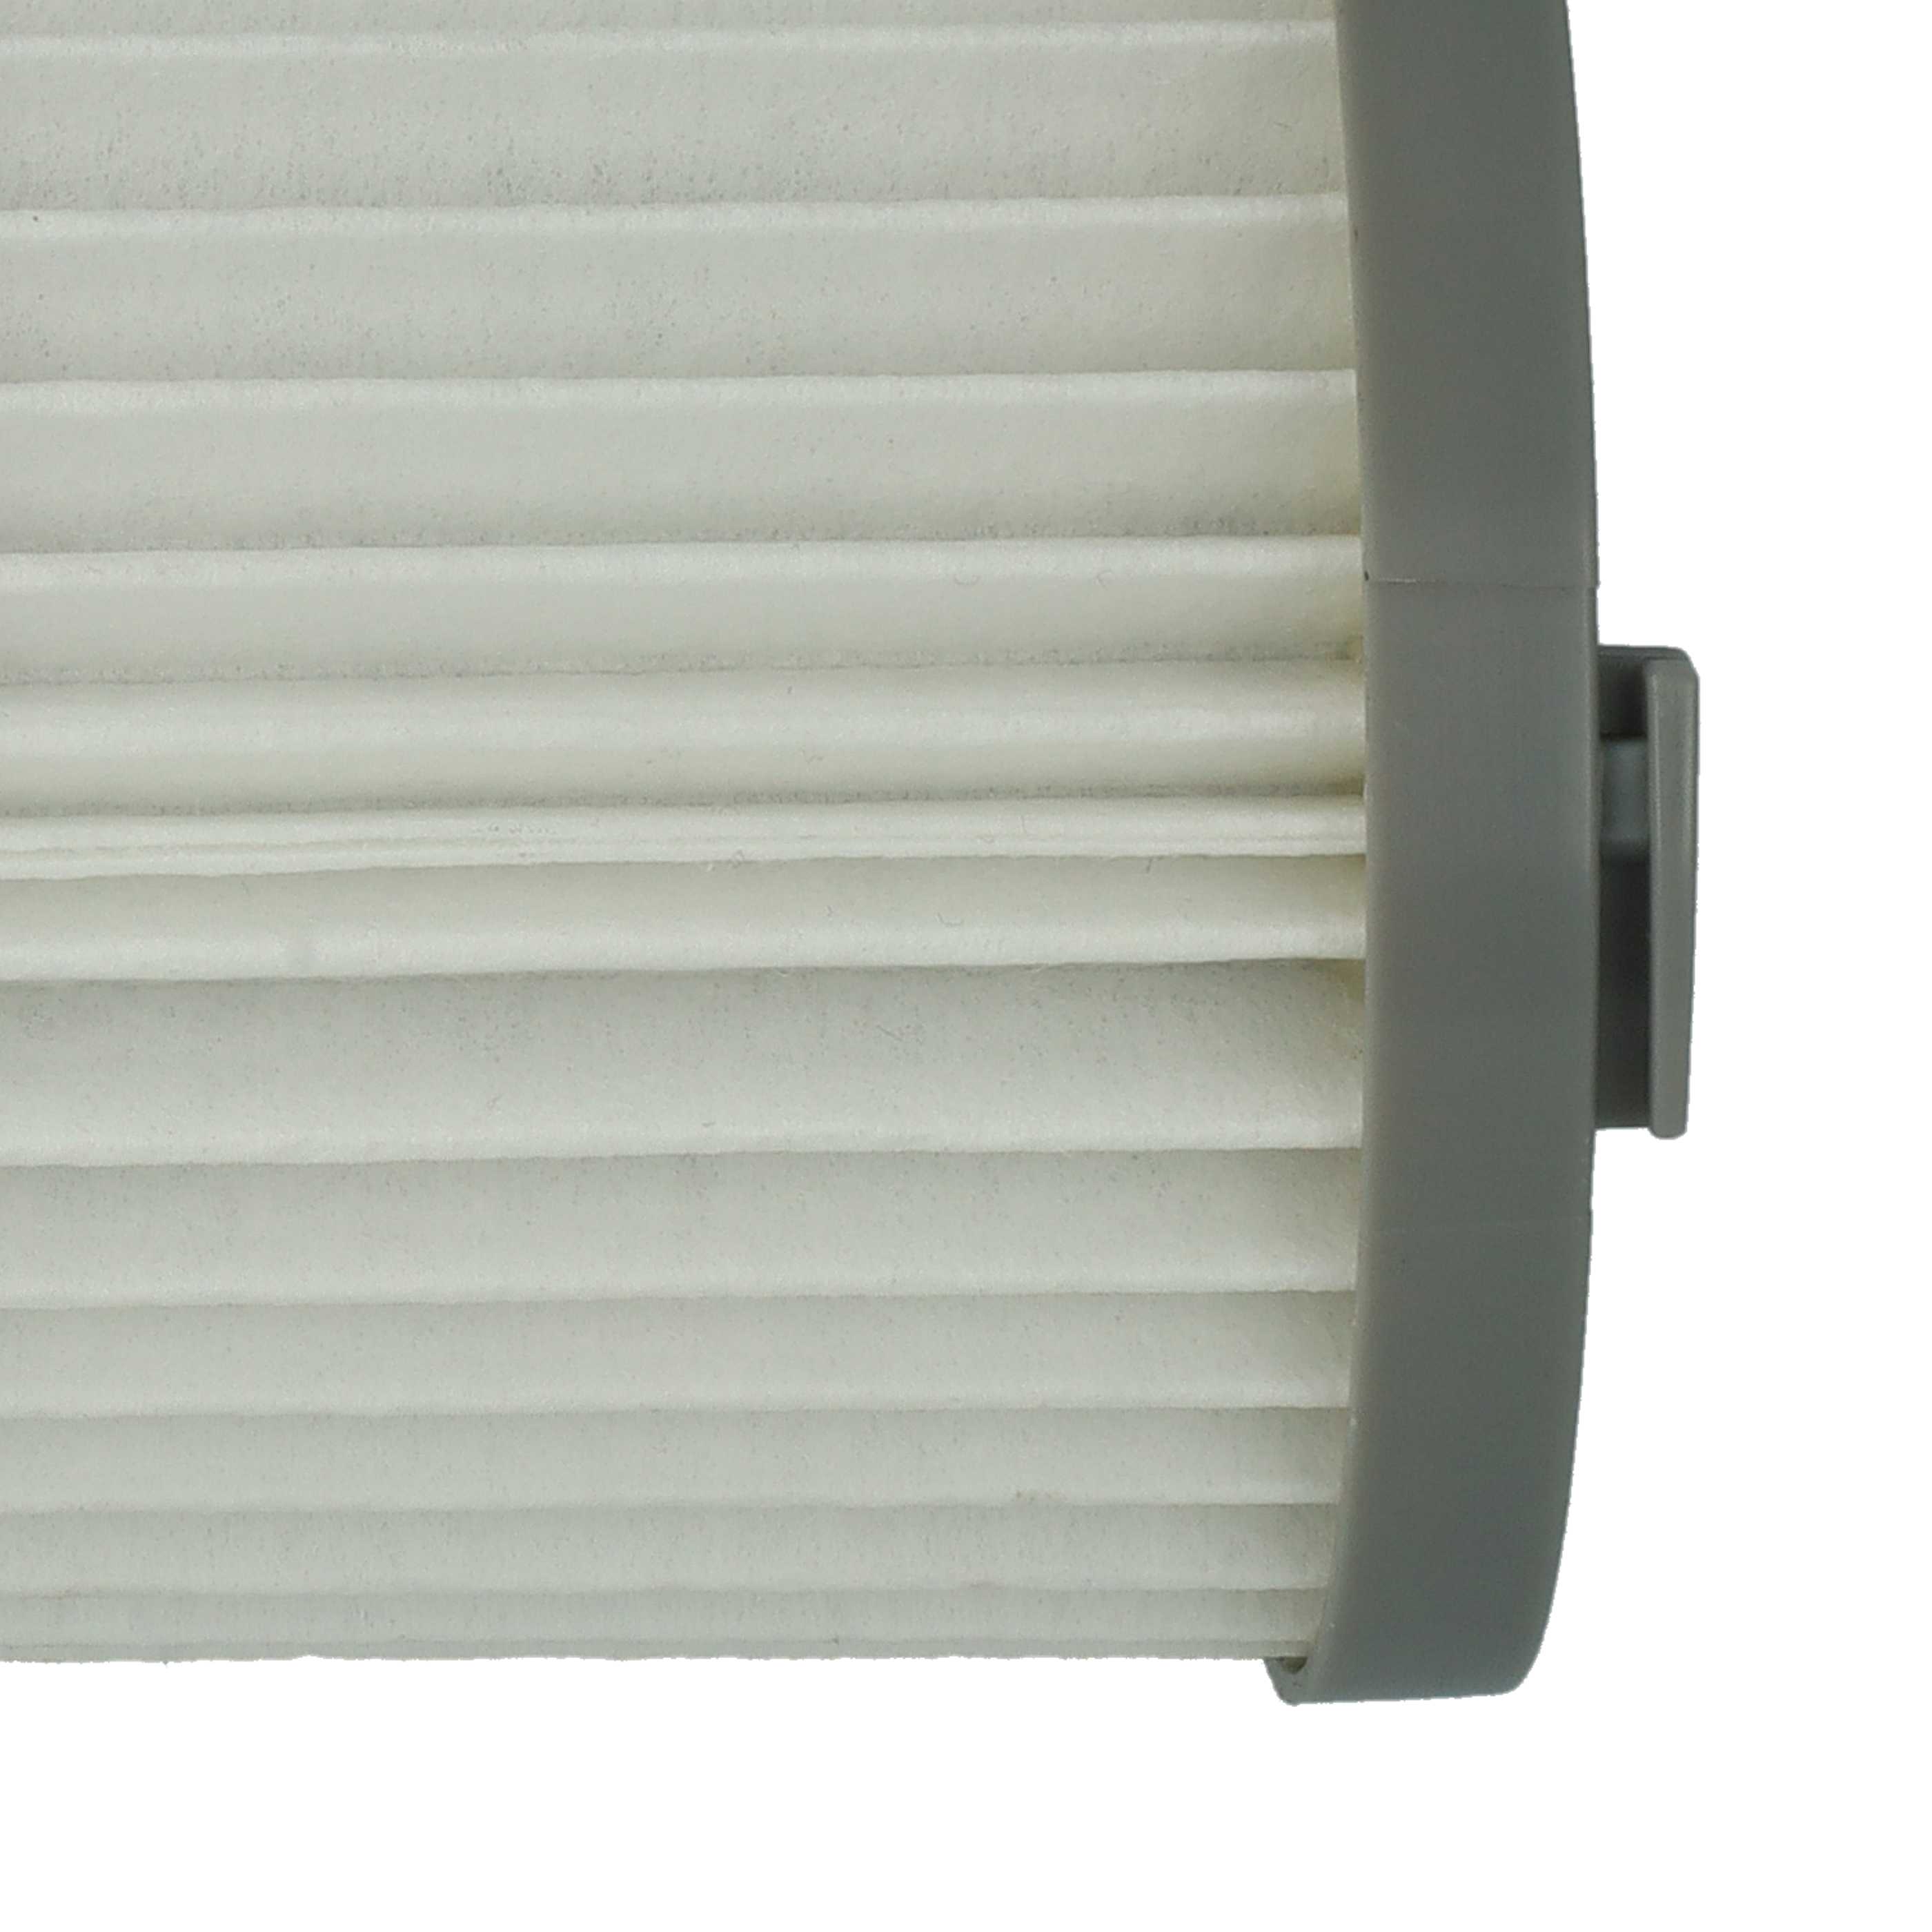 1x HEPA filter replaces AEG 4055453288 for AEG Vacuum Cleaner, white / grey